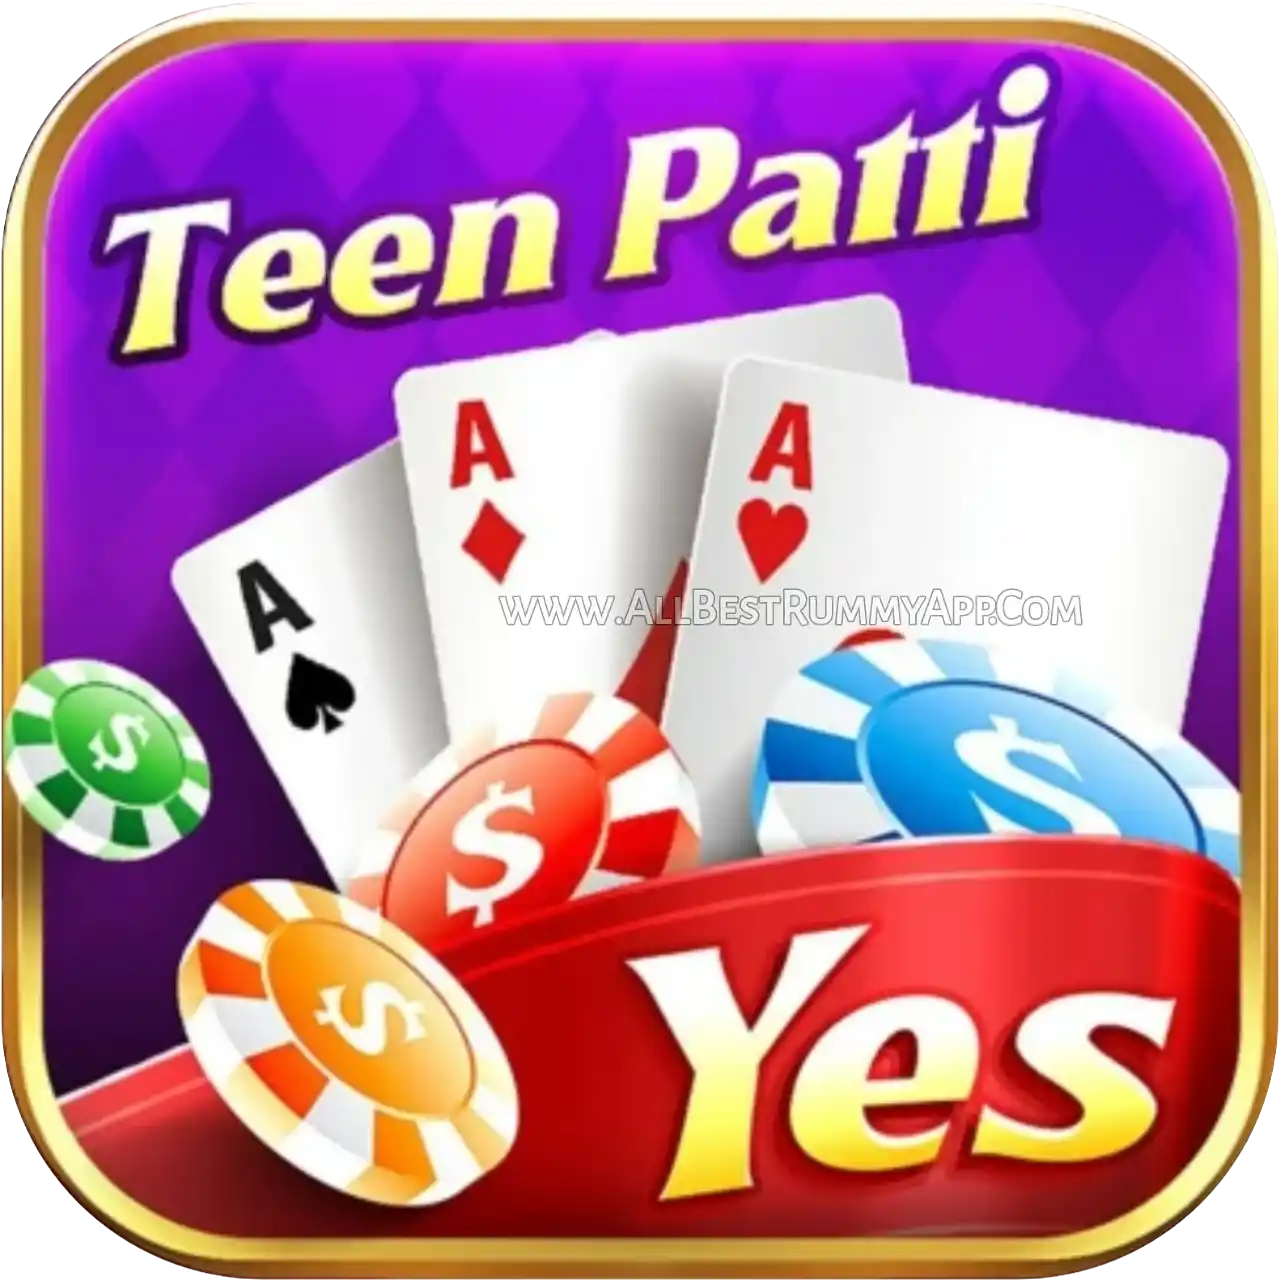 Teen Patti Yes Logo - India Game Download